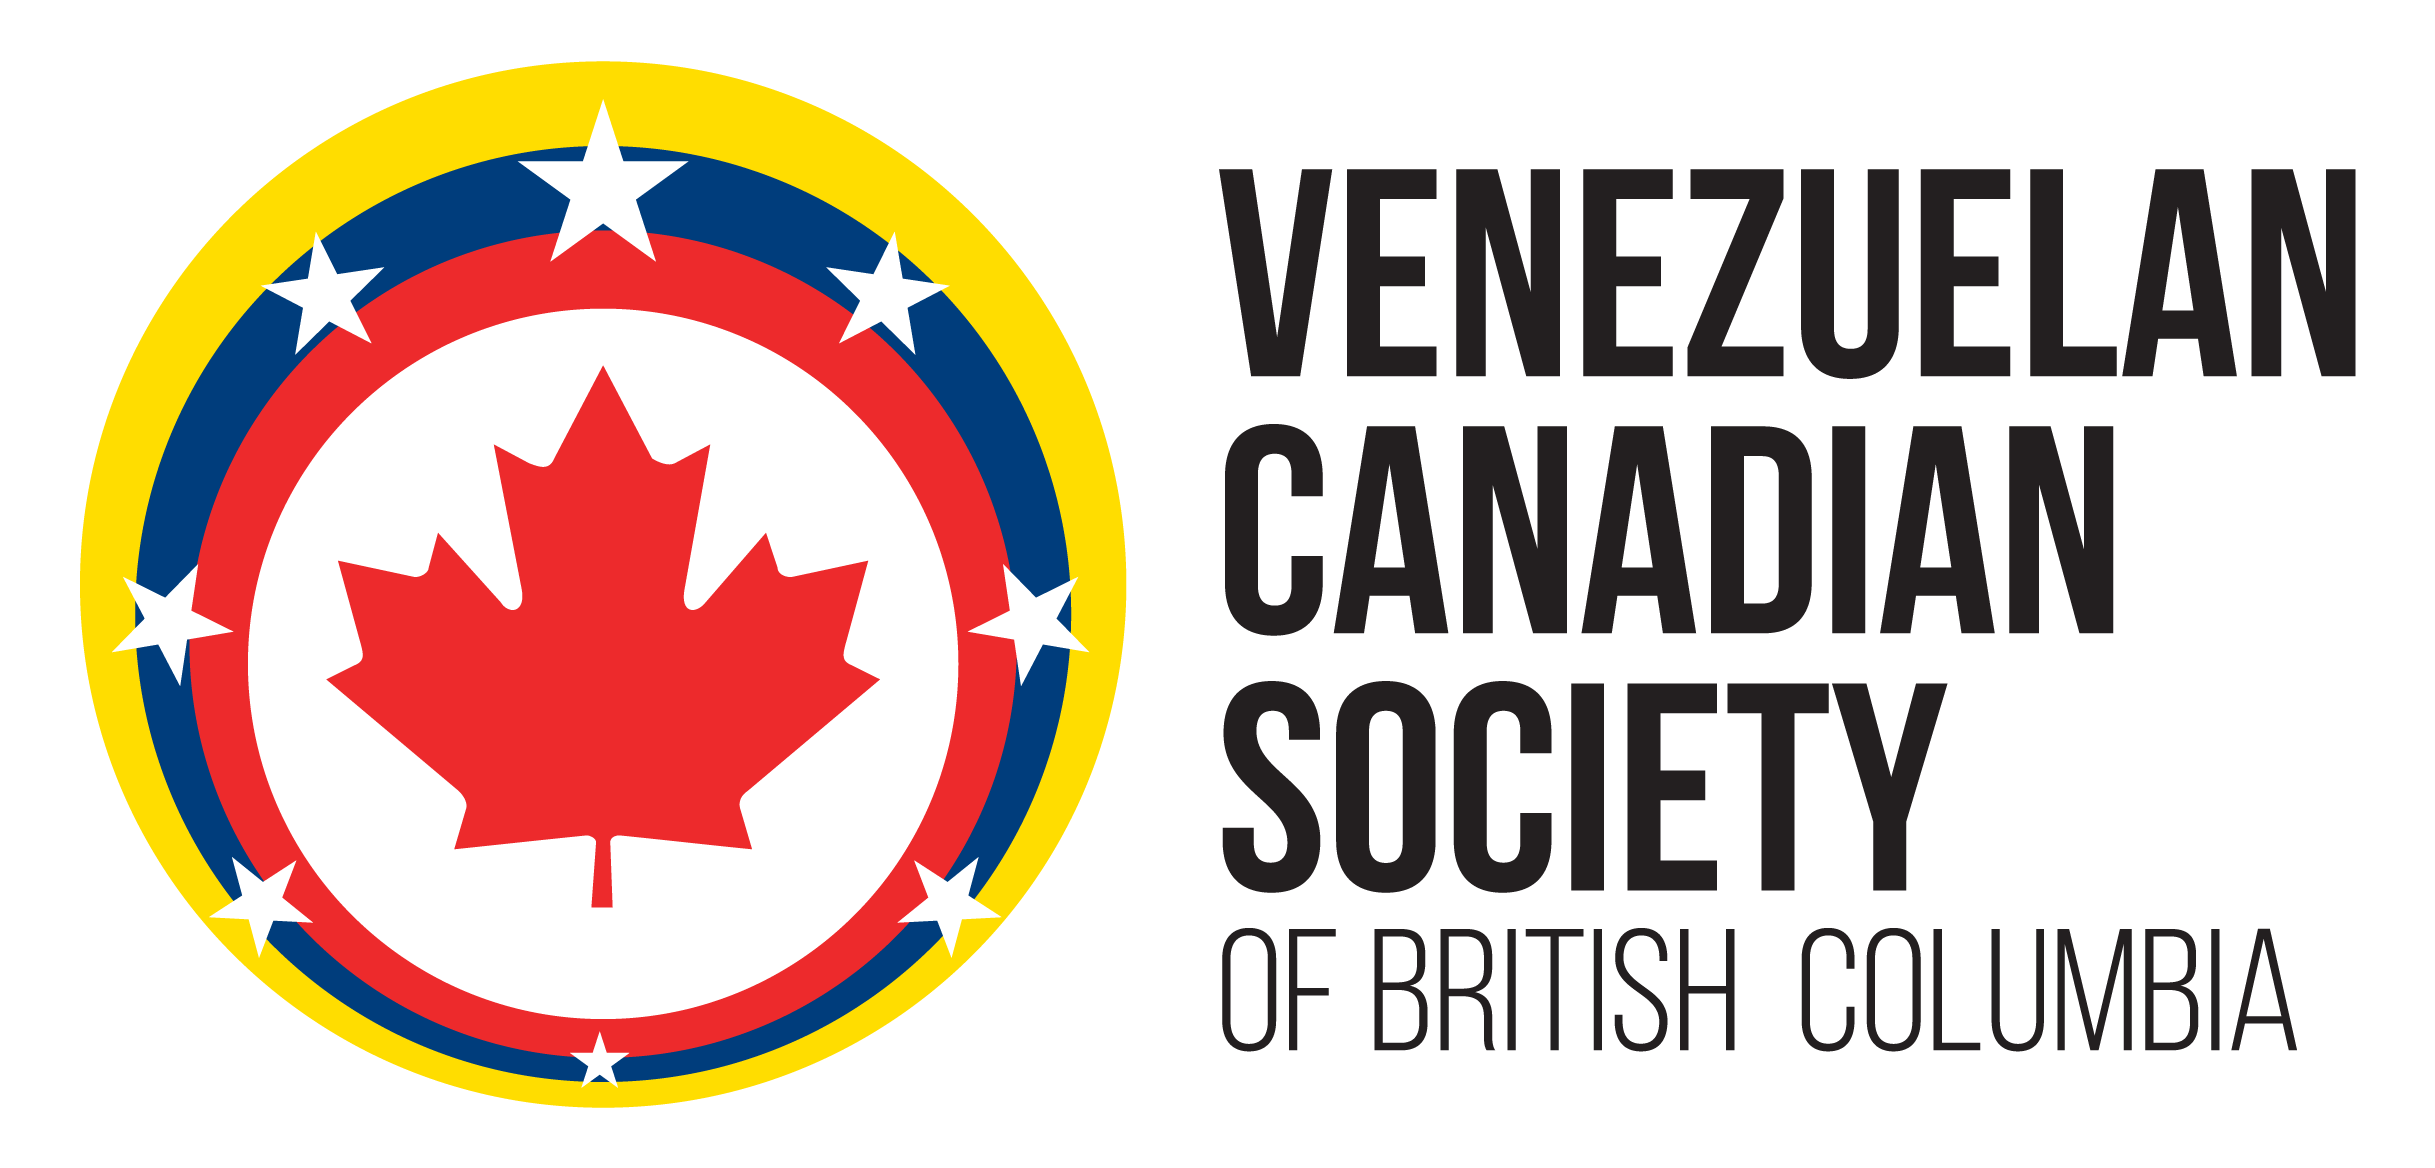 Venezuelan Canadian Society of BC